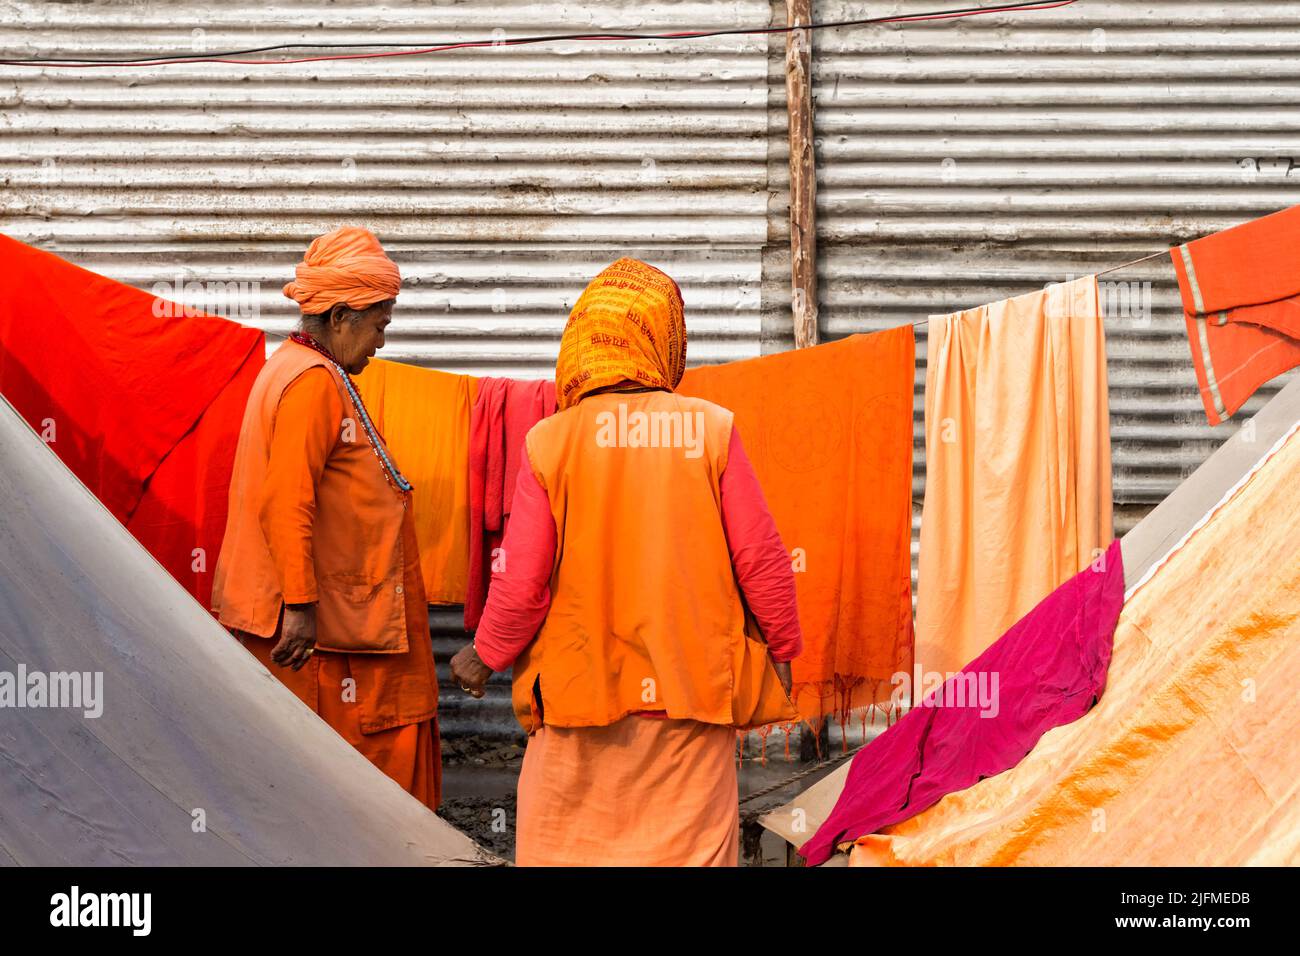 En Sadhvi saree rojo naranja en Allahabad Kumbh Mela, la reunión religiosa más grande del mundo, Uttar Pradesh, India Foto de stock